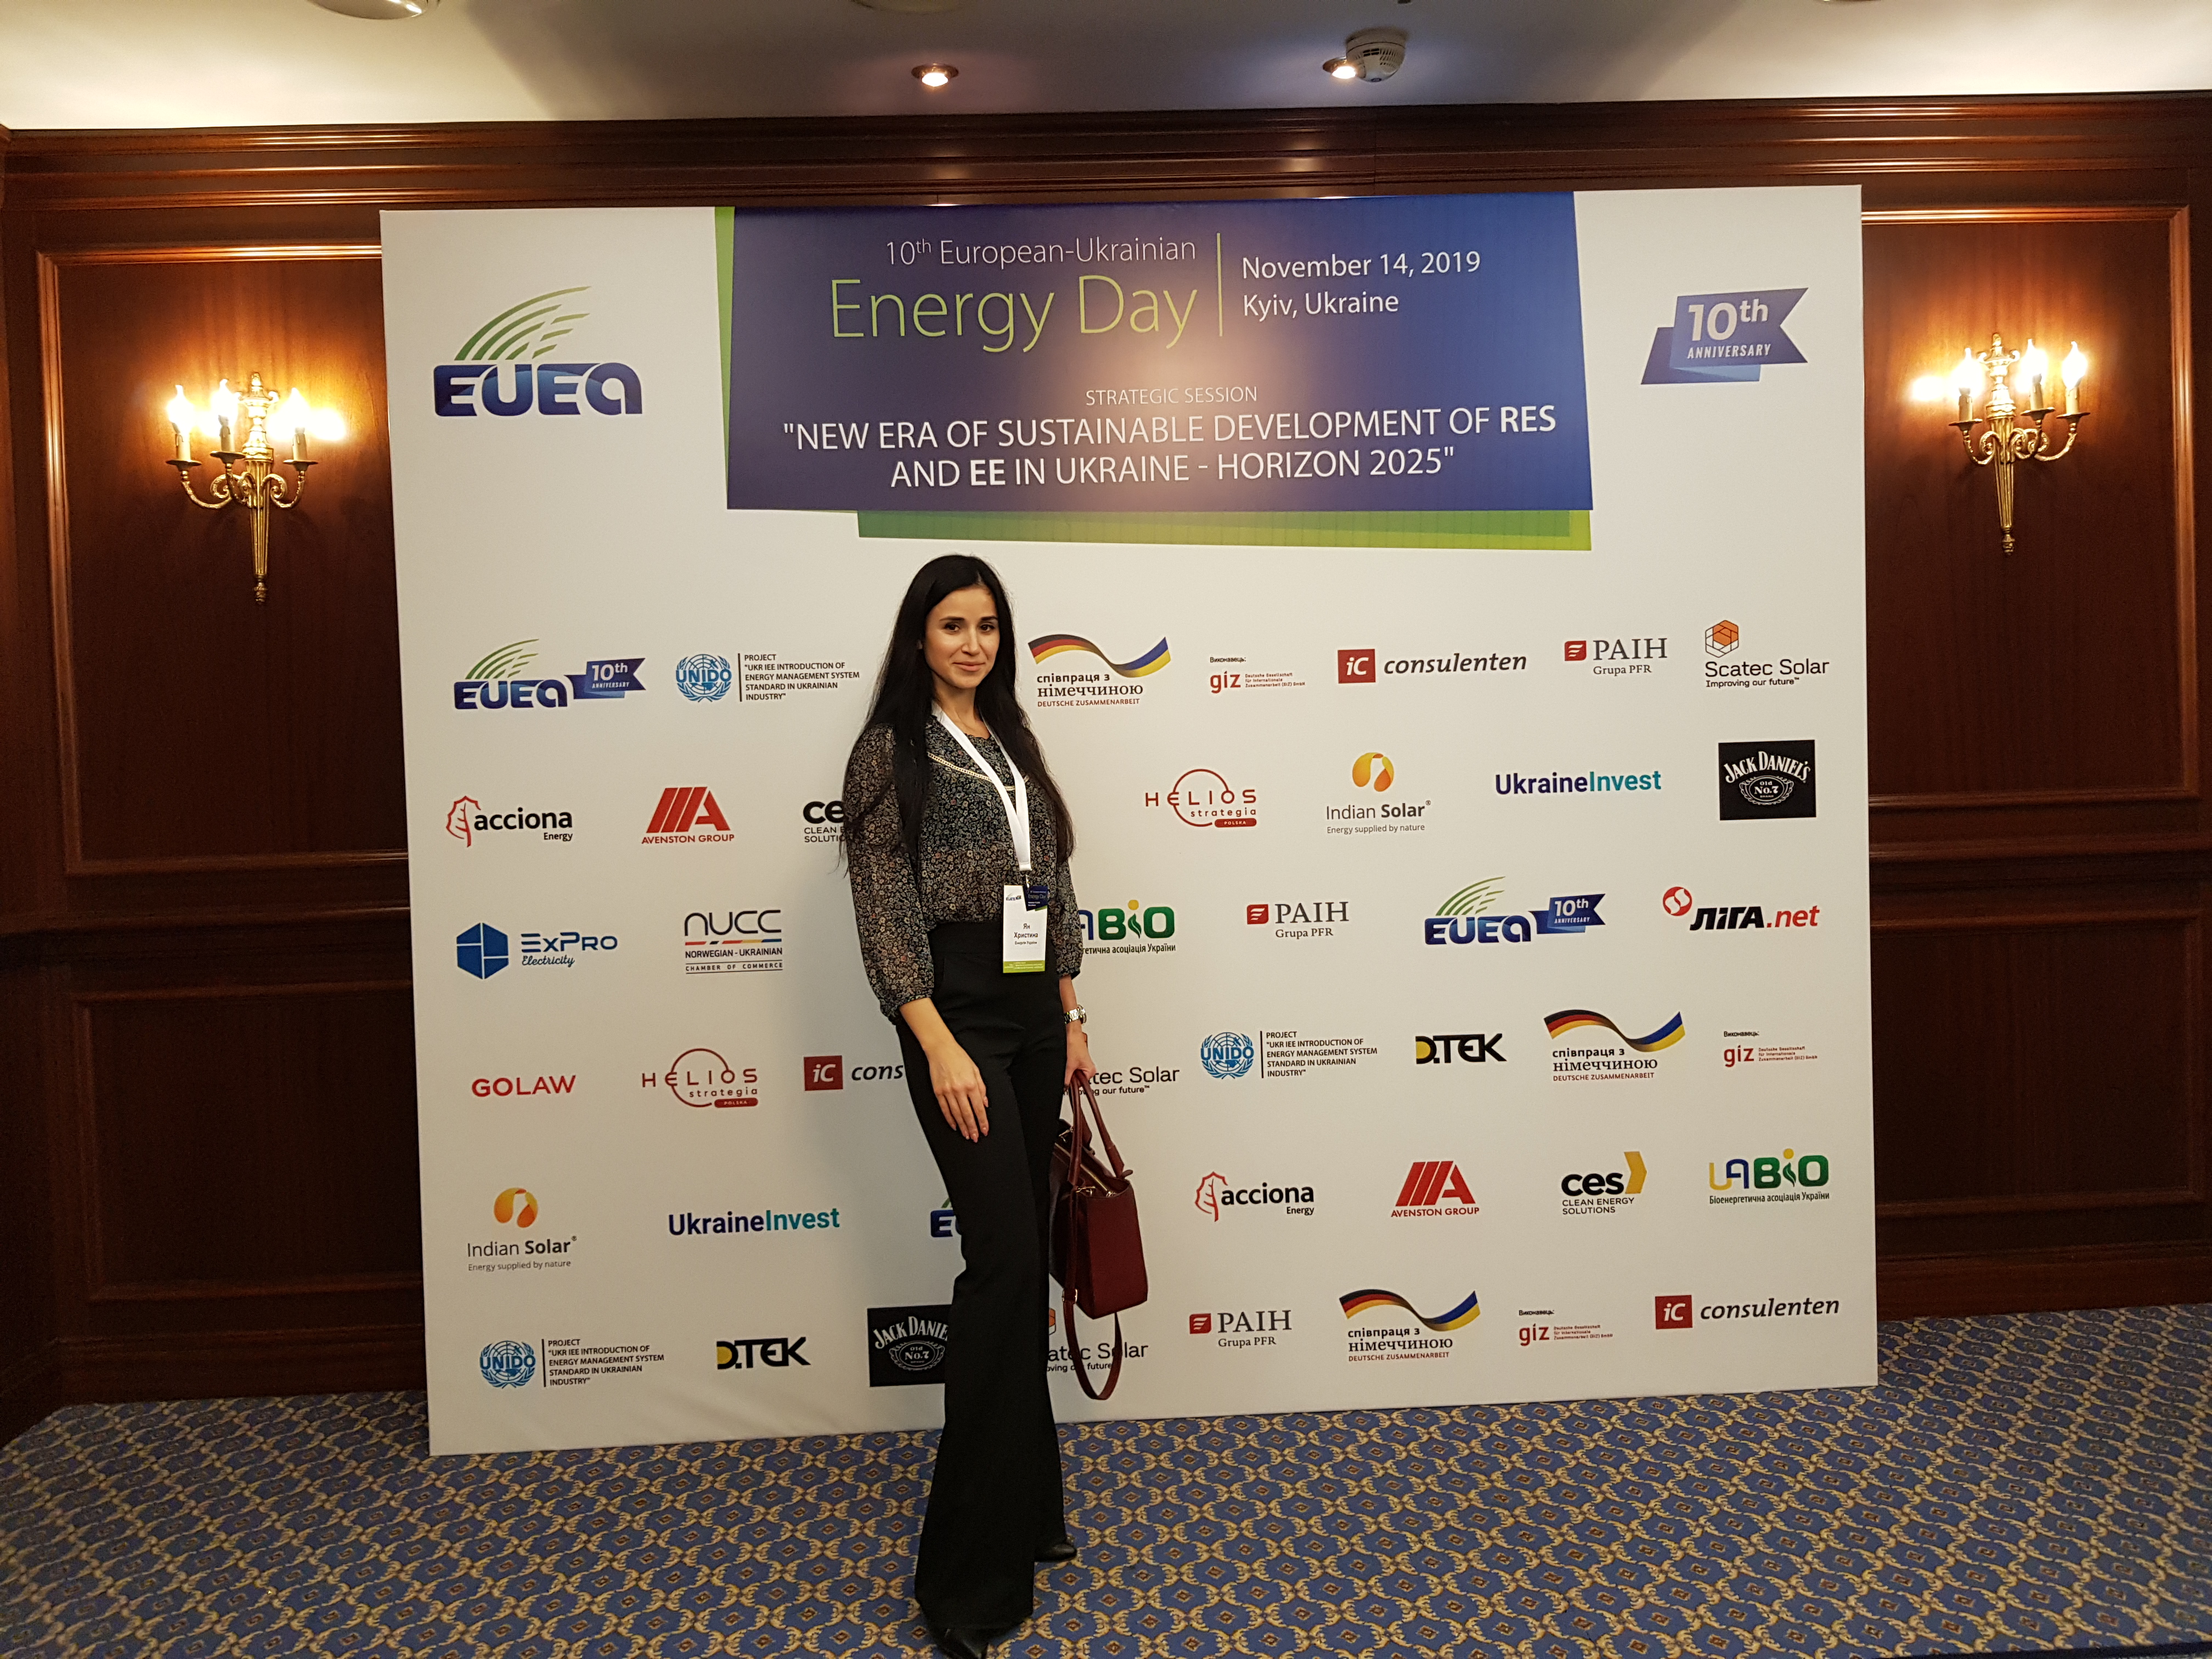 Ukraine Energy experts visited the 10th European-Ukrainian Energy Day